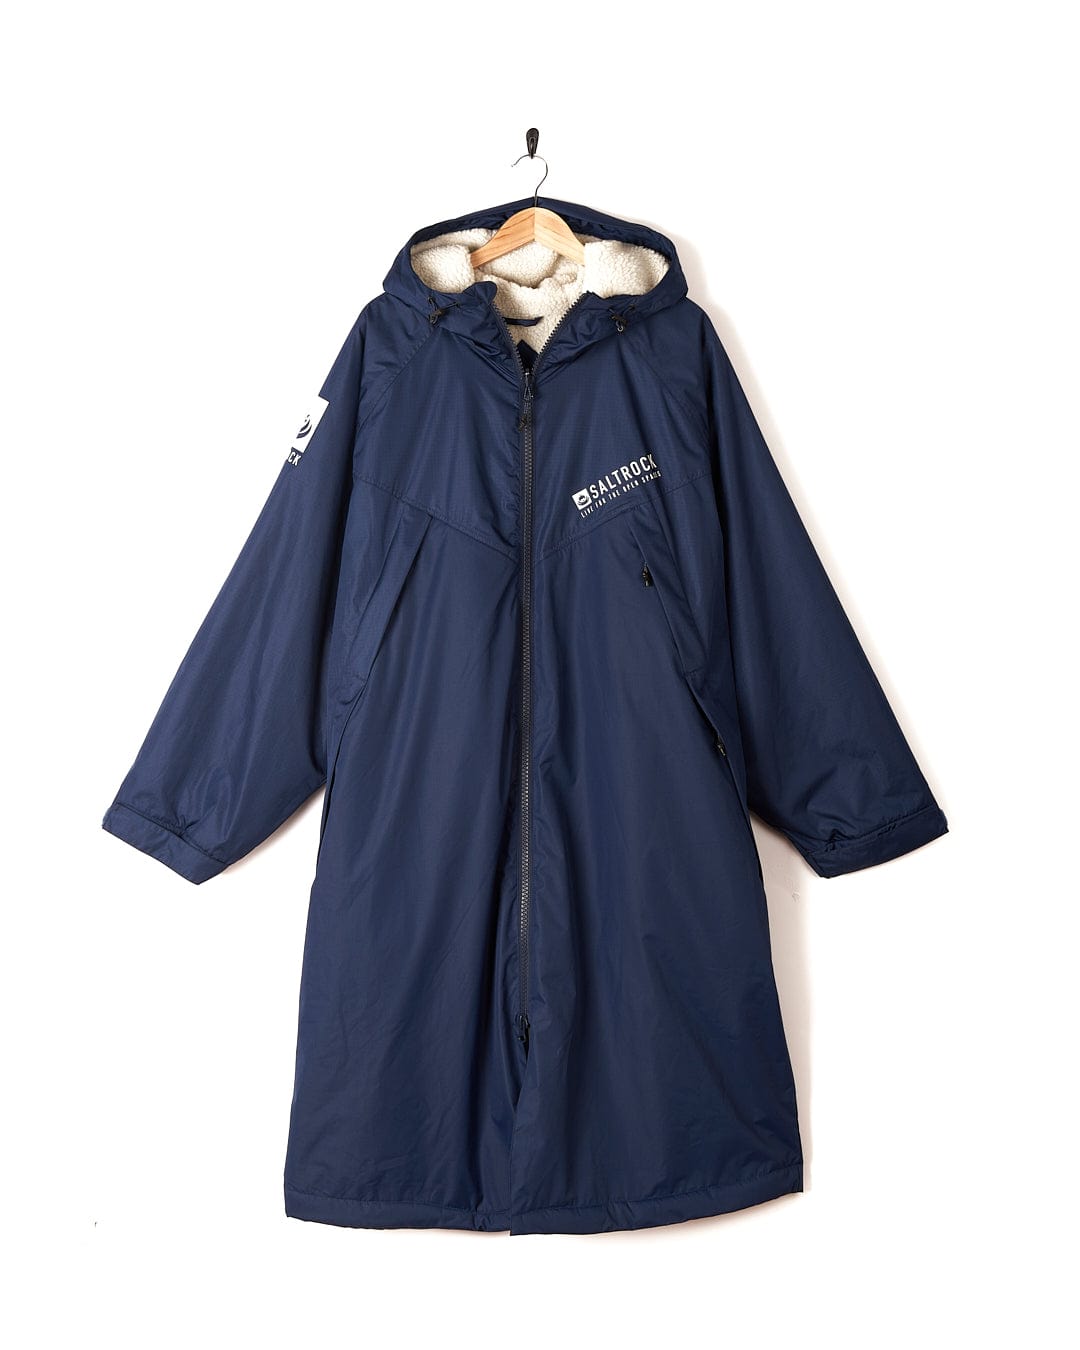 A Saltrock Four Seasons - Waterproof Changing Robe - Blue hooded raincoat hanging on a hanger.